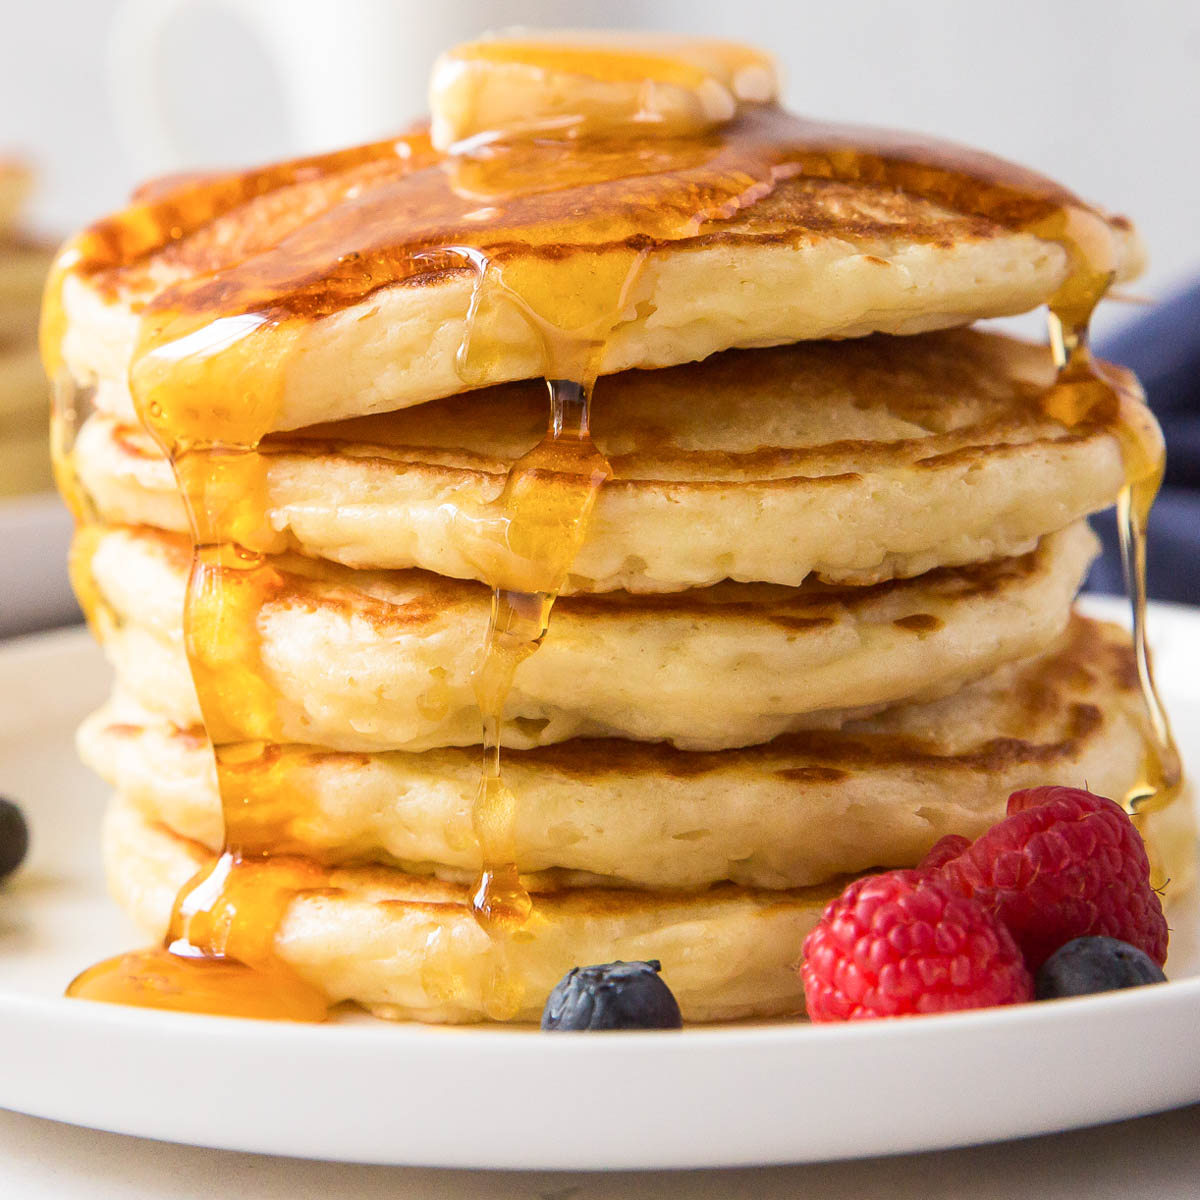 https://kristineskitchenblog.com/wp-content/uploads/2021/04/buttermilk-pancakes-1200-square-for-recipe-card-40.jpg